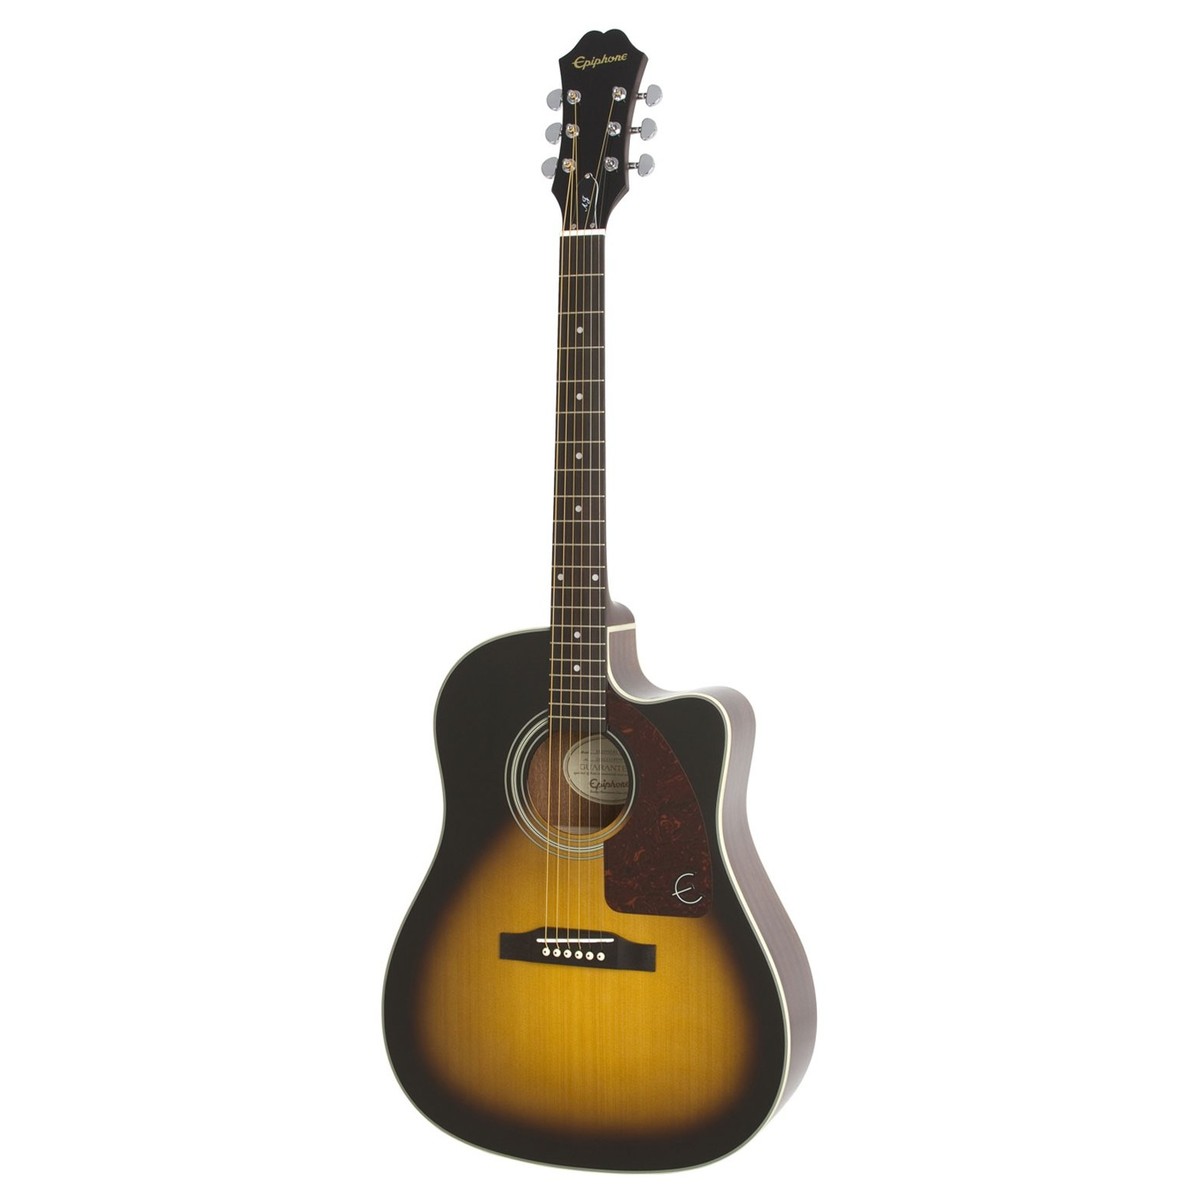 Epiphone AJ-210CE Outfit Acoustic Guitar - Vintage Sunburst | Reco Music Malaysia